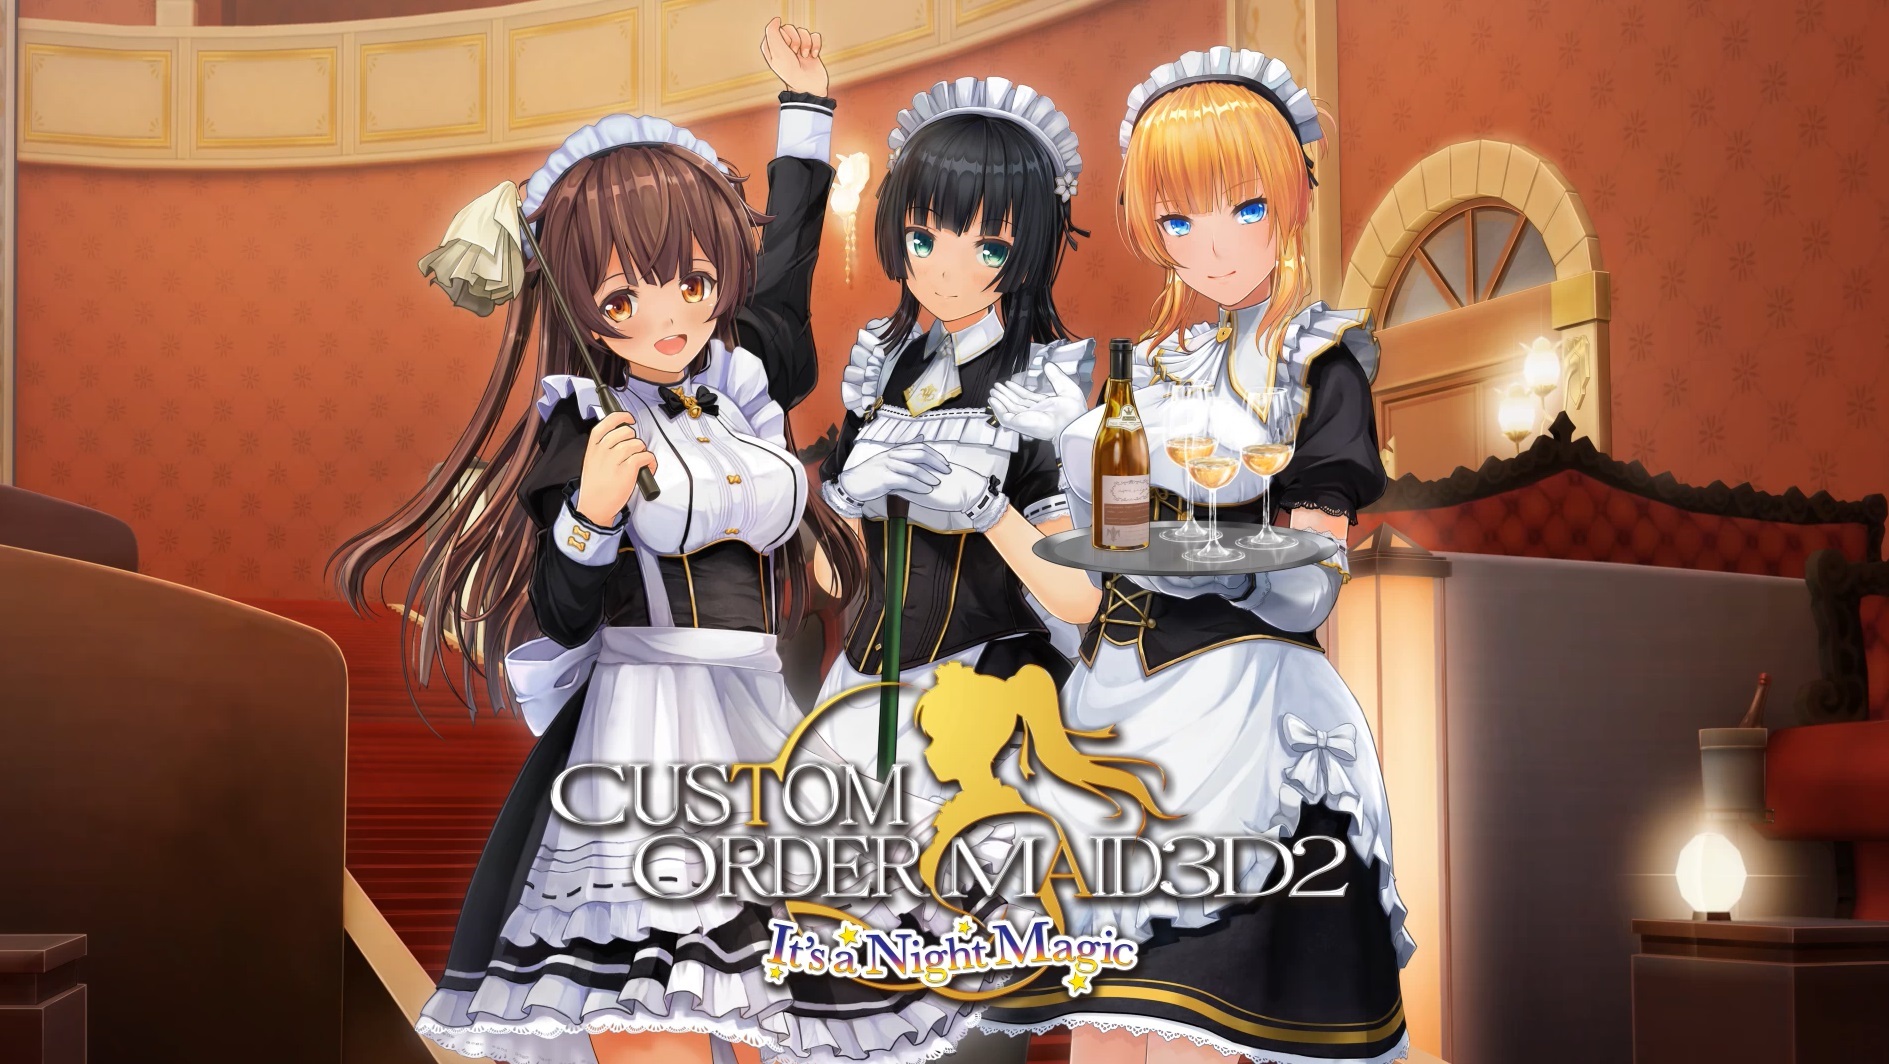 download custom order maid 3d2